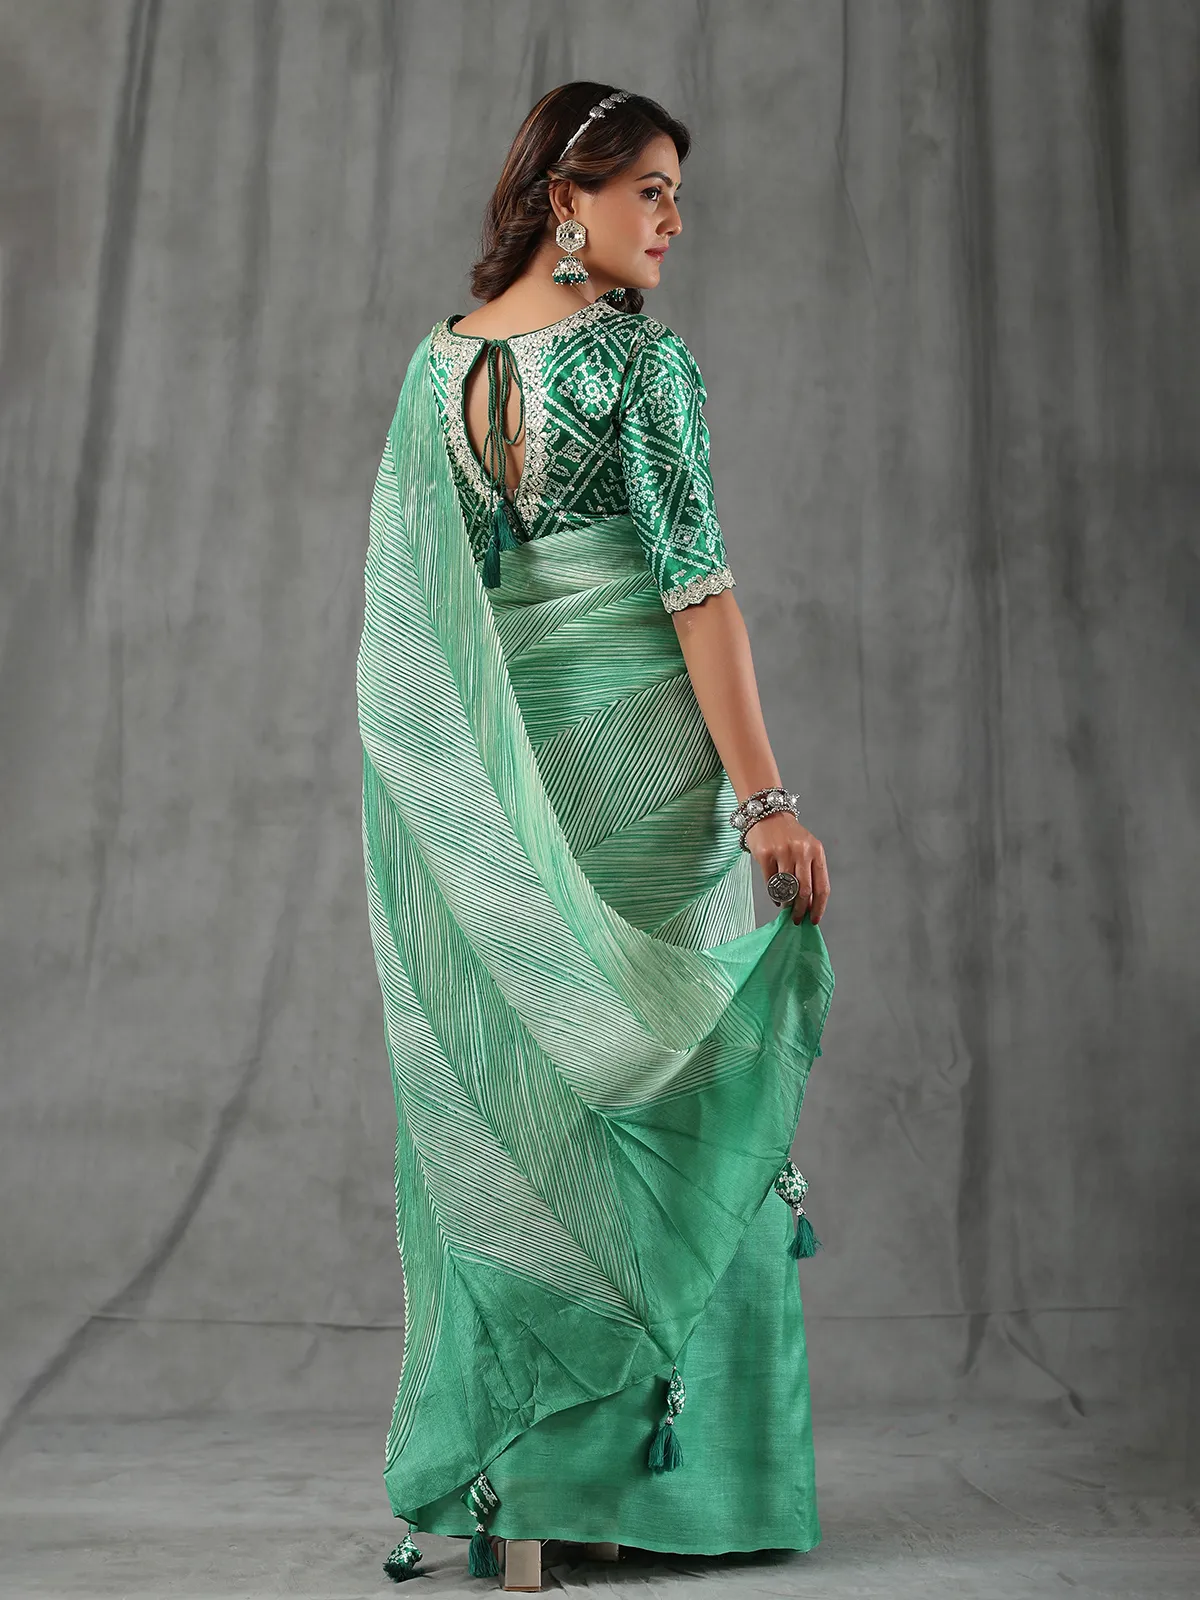 Green half n half saree in tussar silk